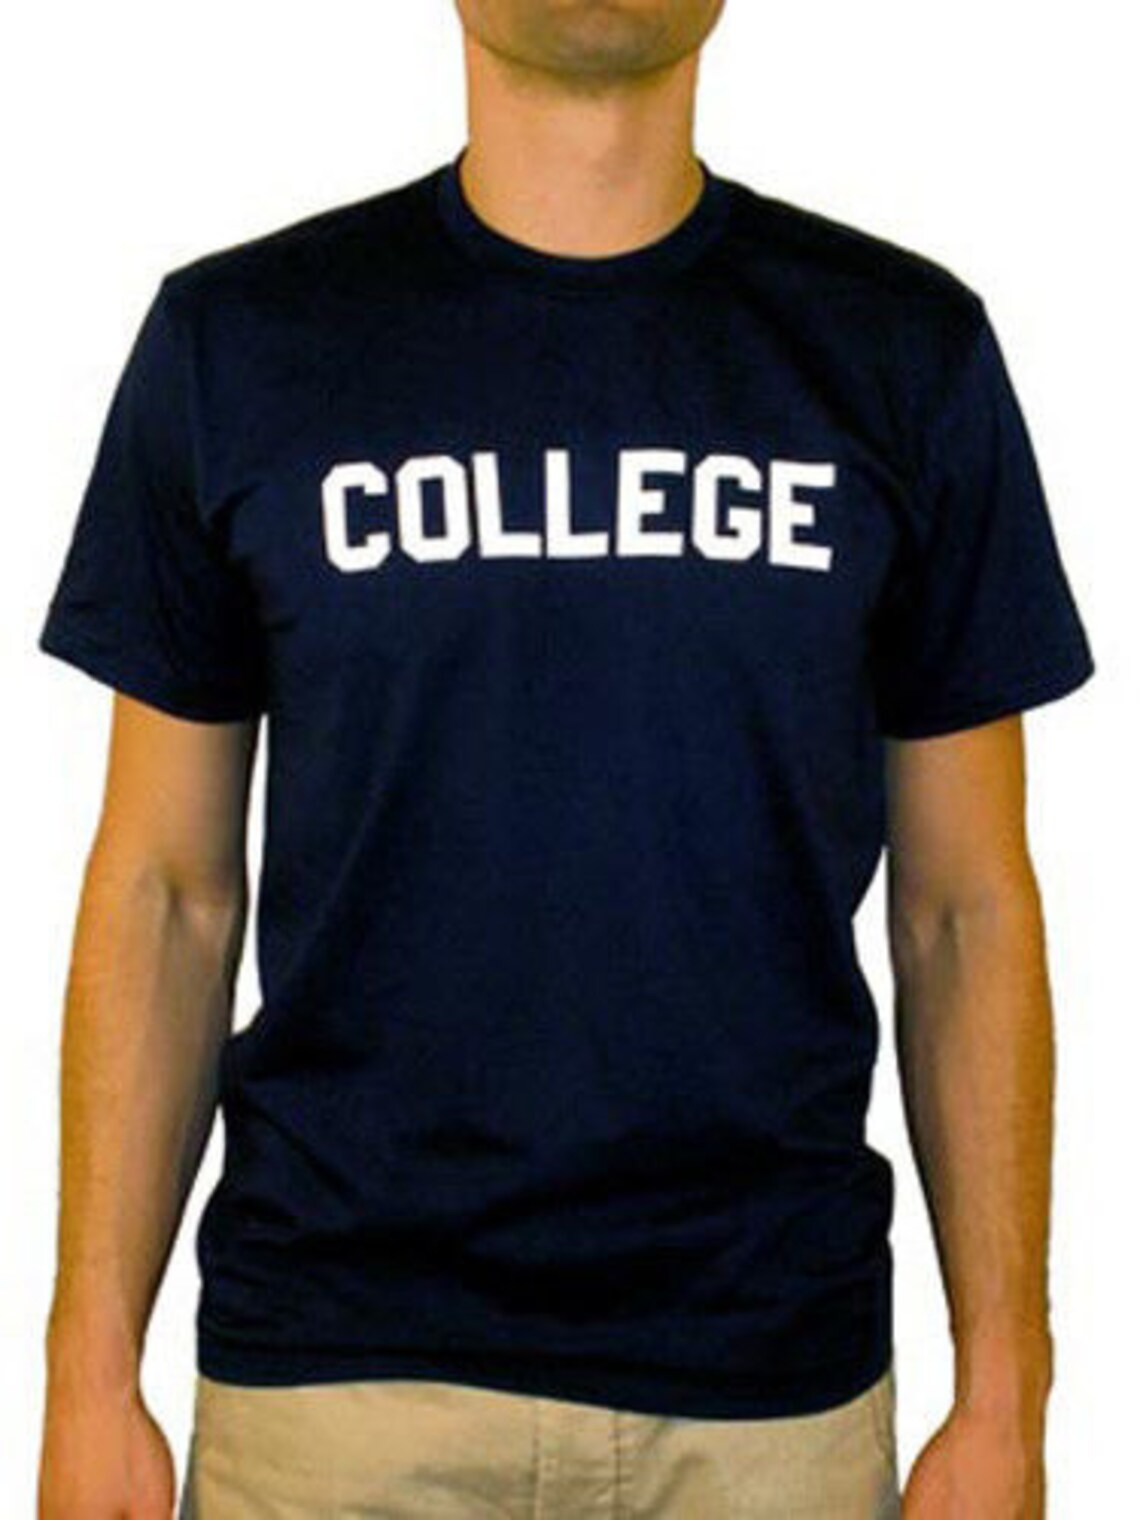 Animal House College T-shirt John Belushi Bluto Shirt | Etsy